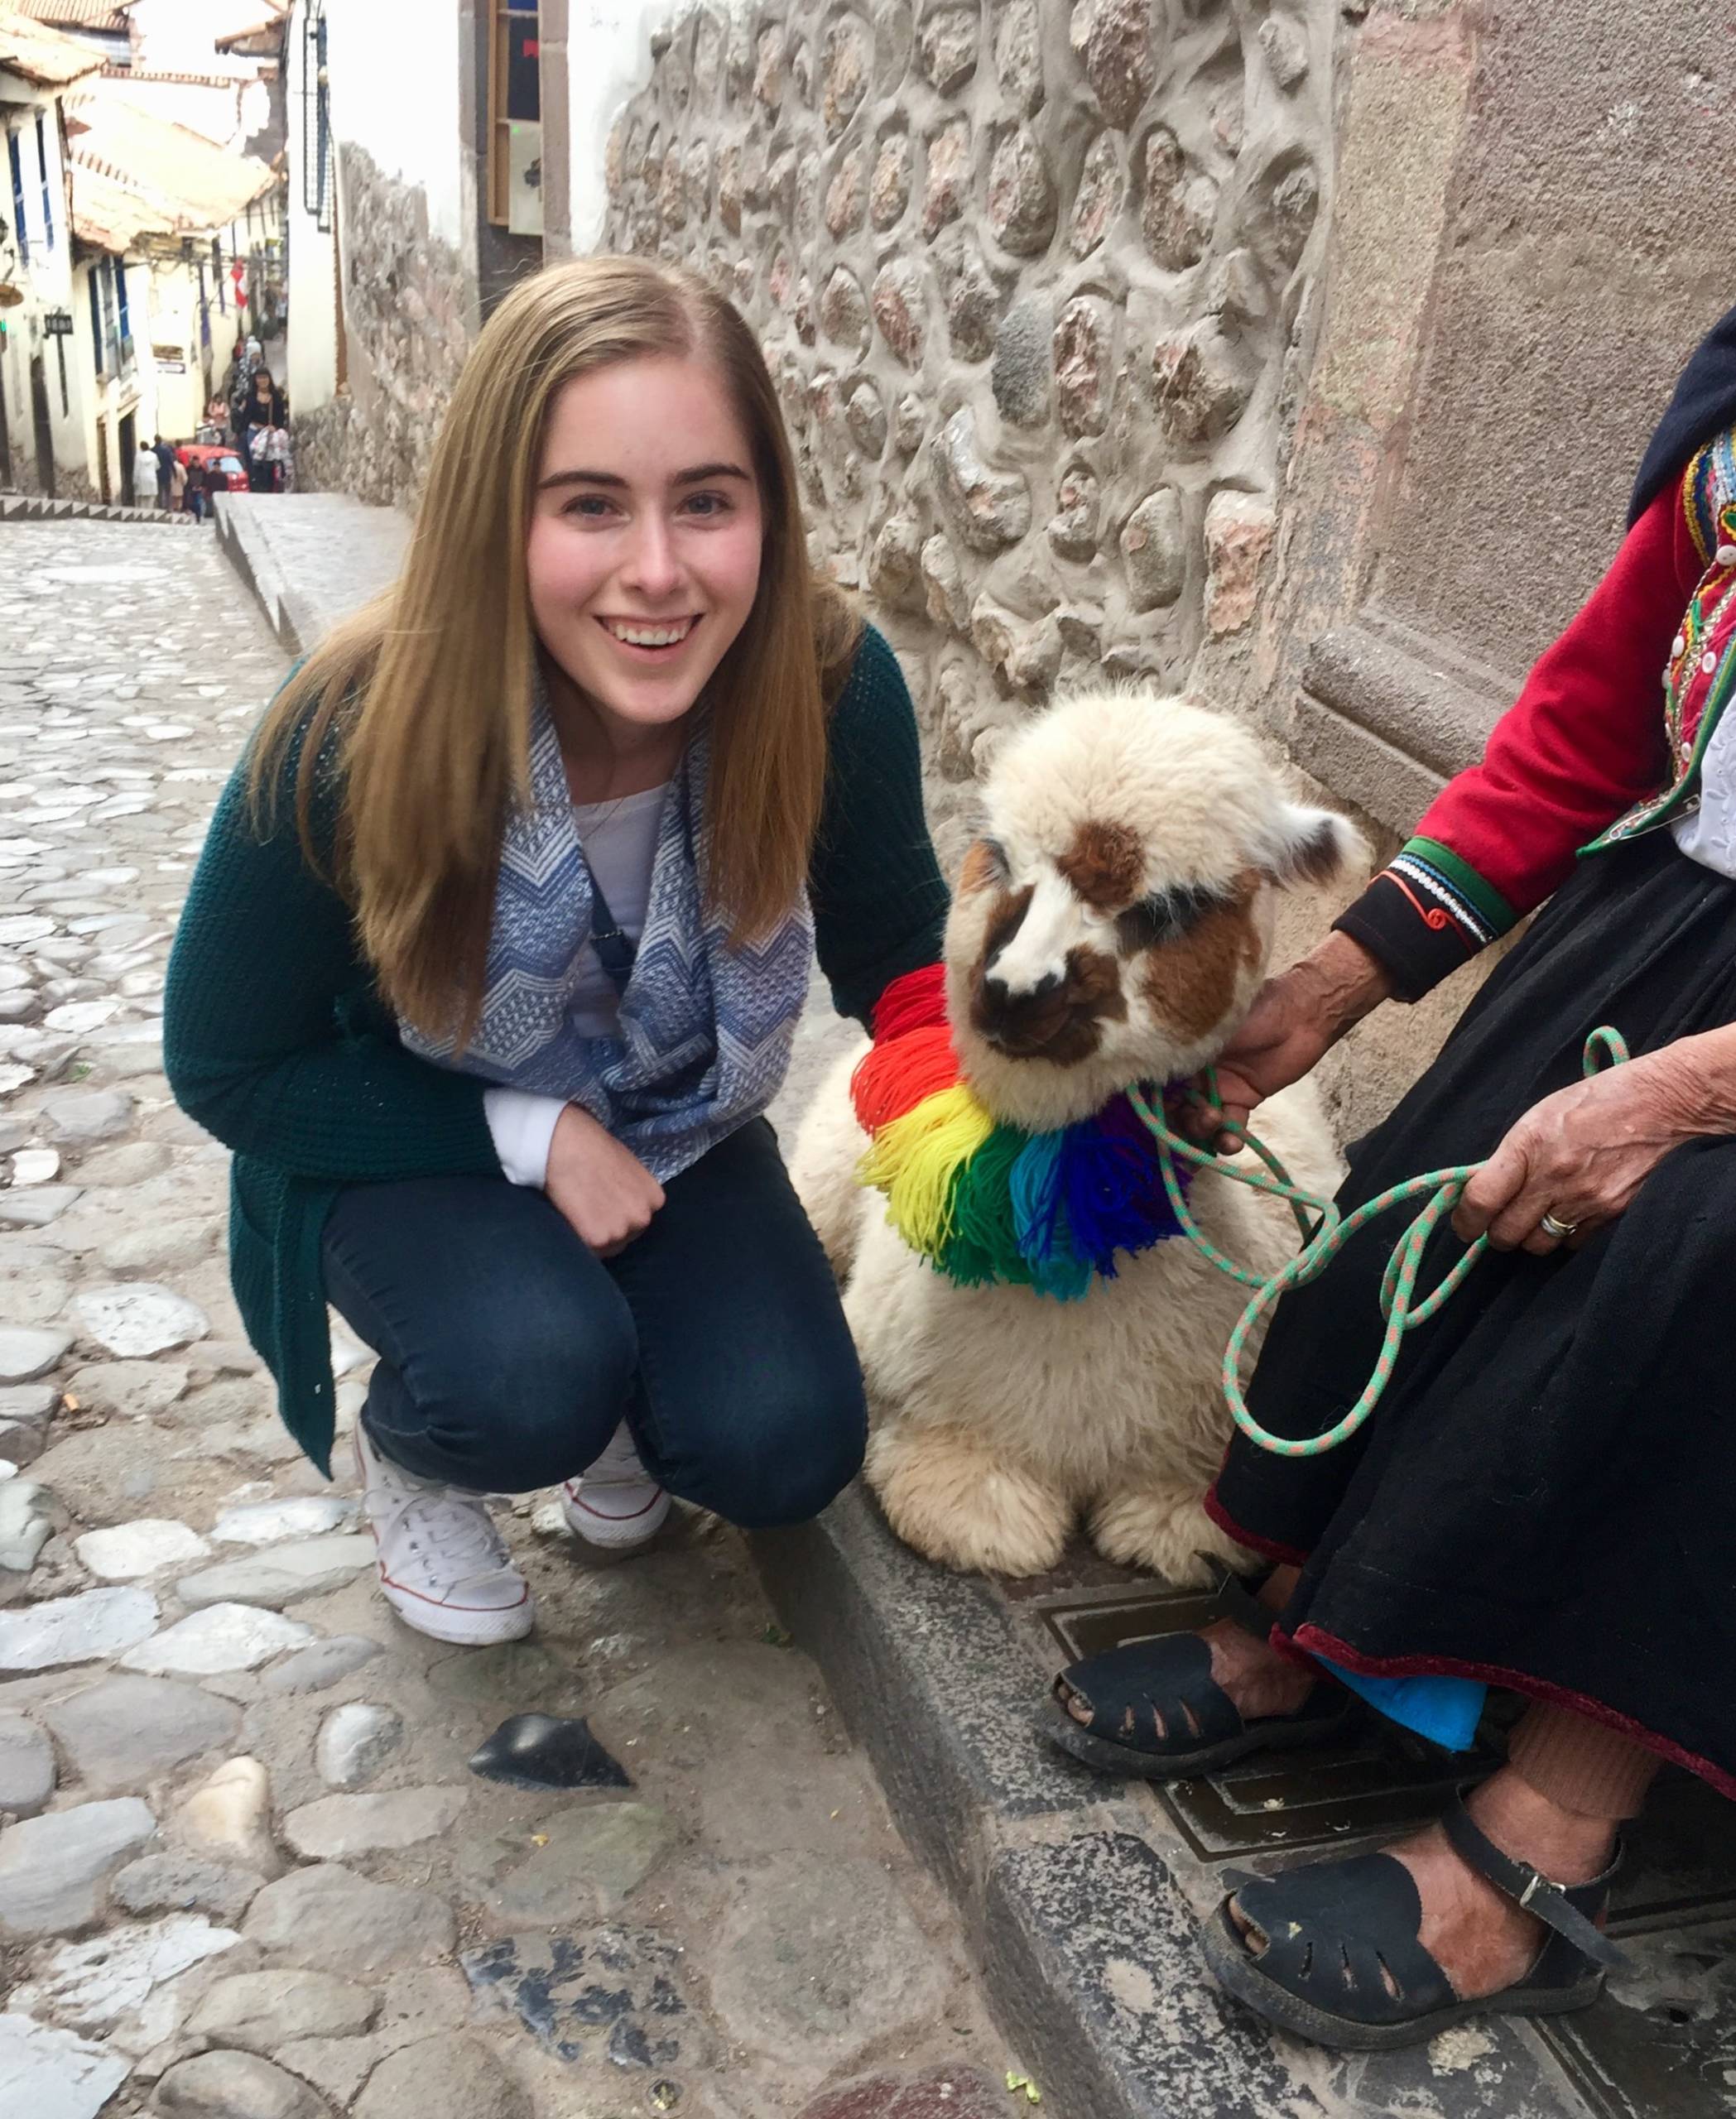 Julia says hello to a baby alpaca during a trip to Peru.